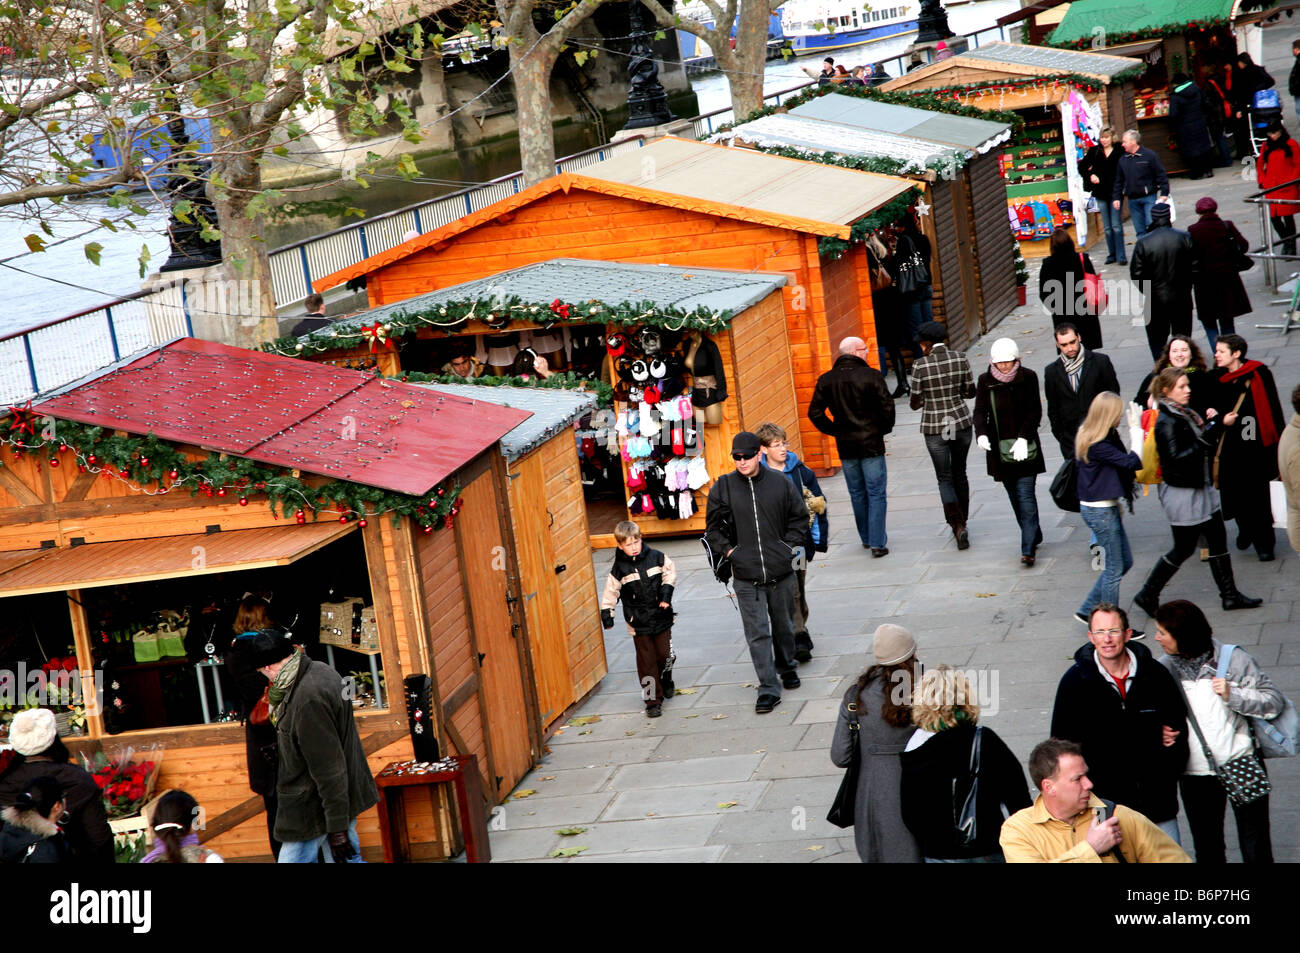 German Christmas market on South Bank, London Stock Photo